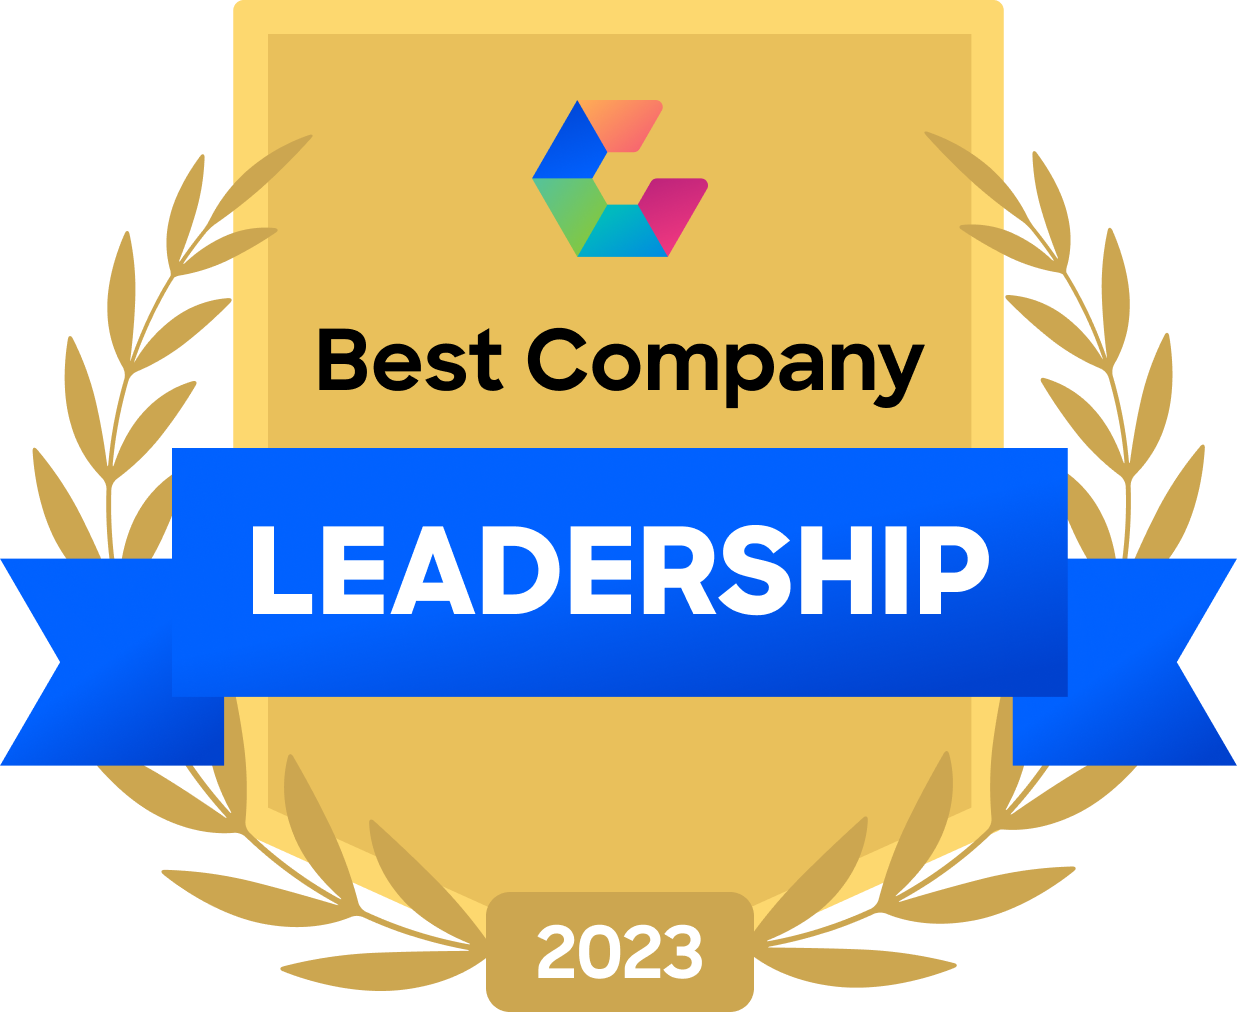 Best Company in Leadership